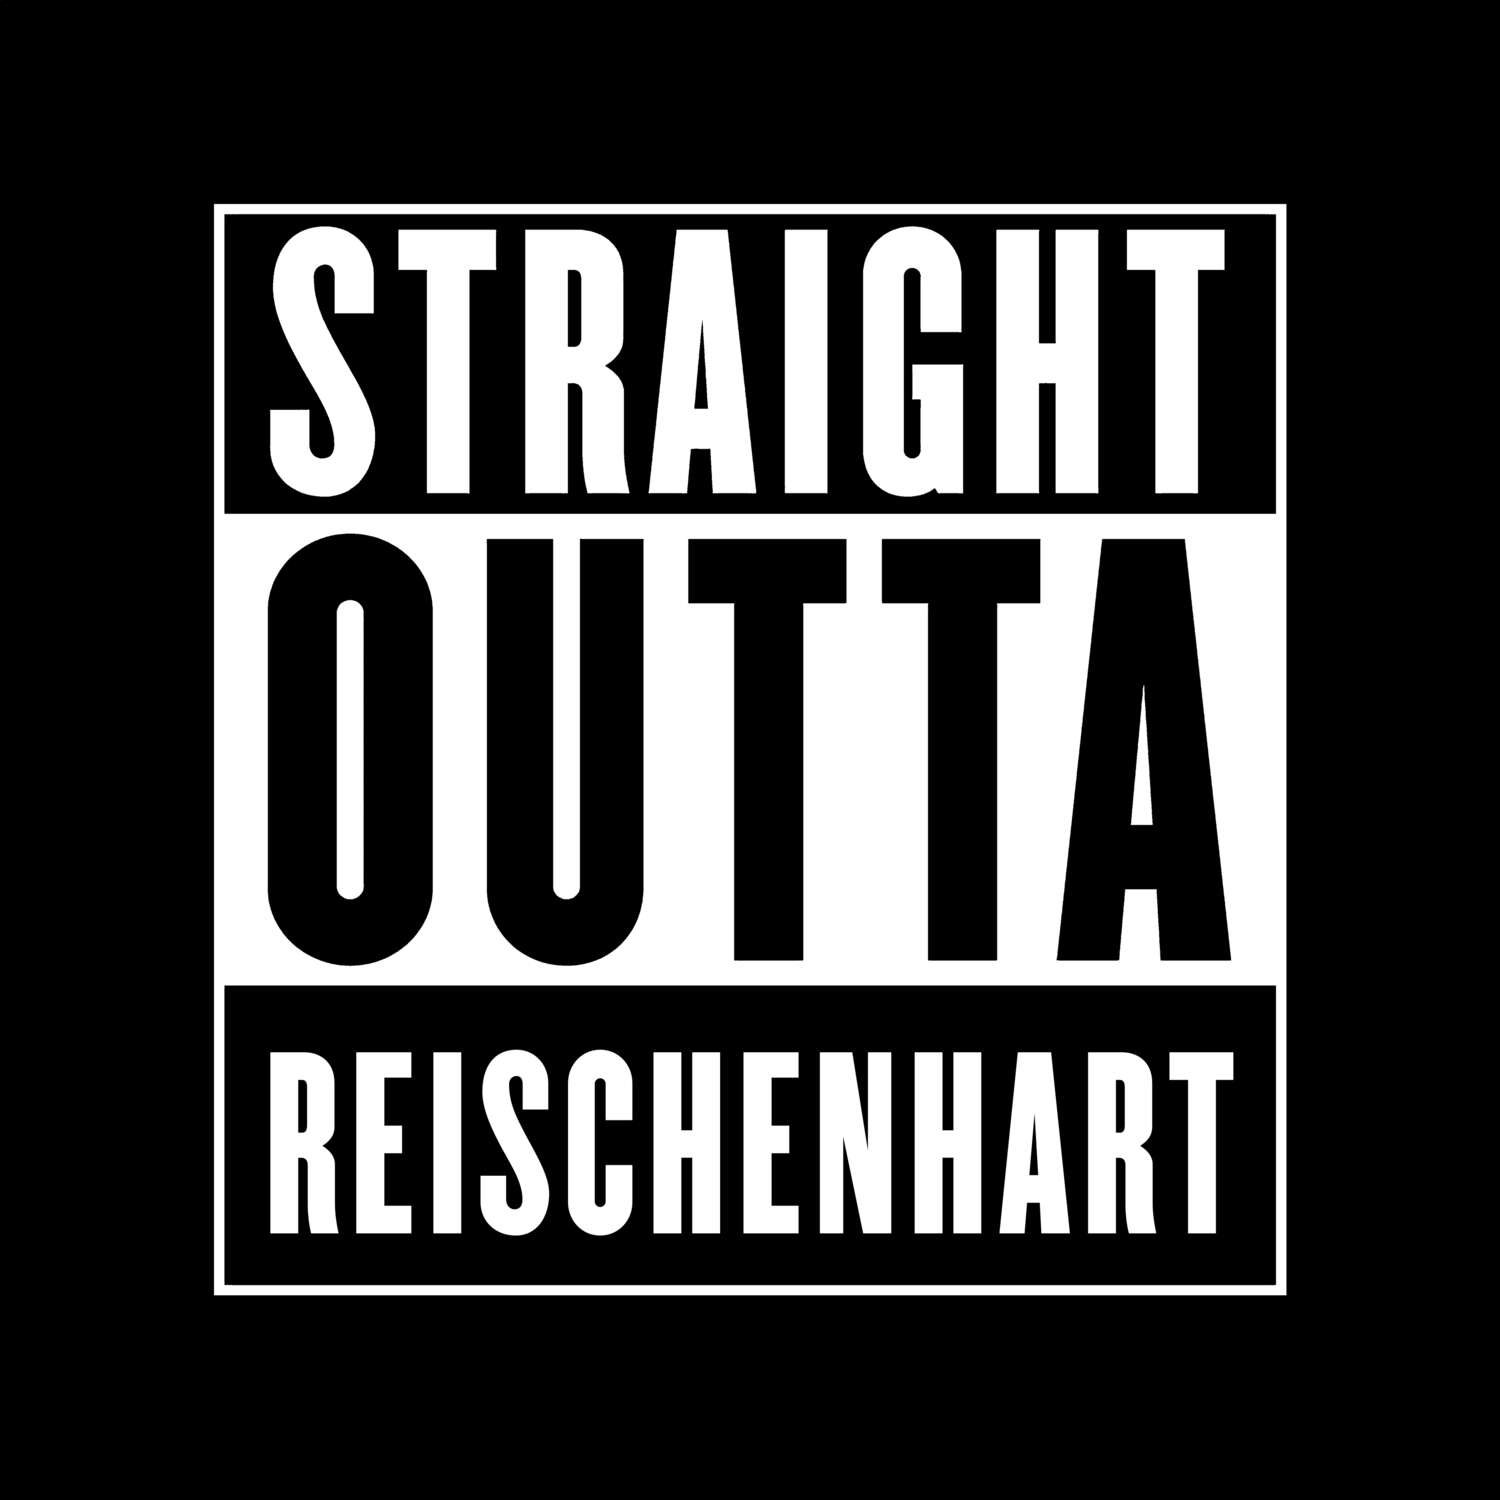 Reischenhart T-Shirt »Straight Outta«